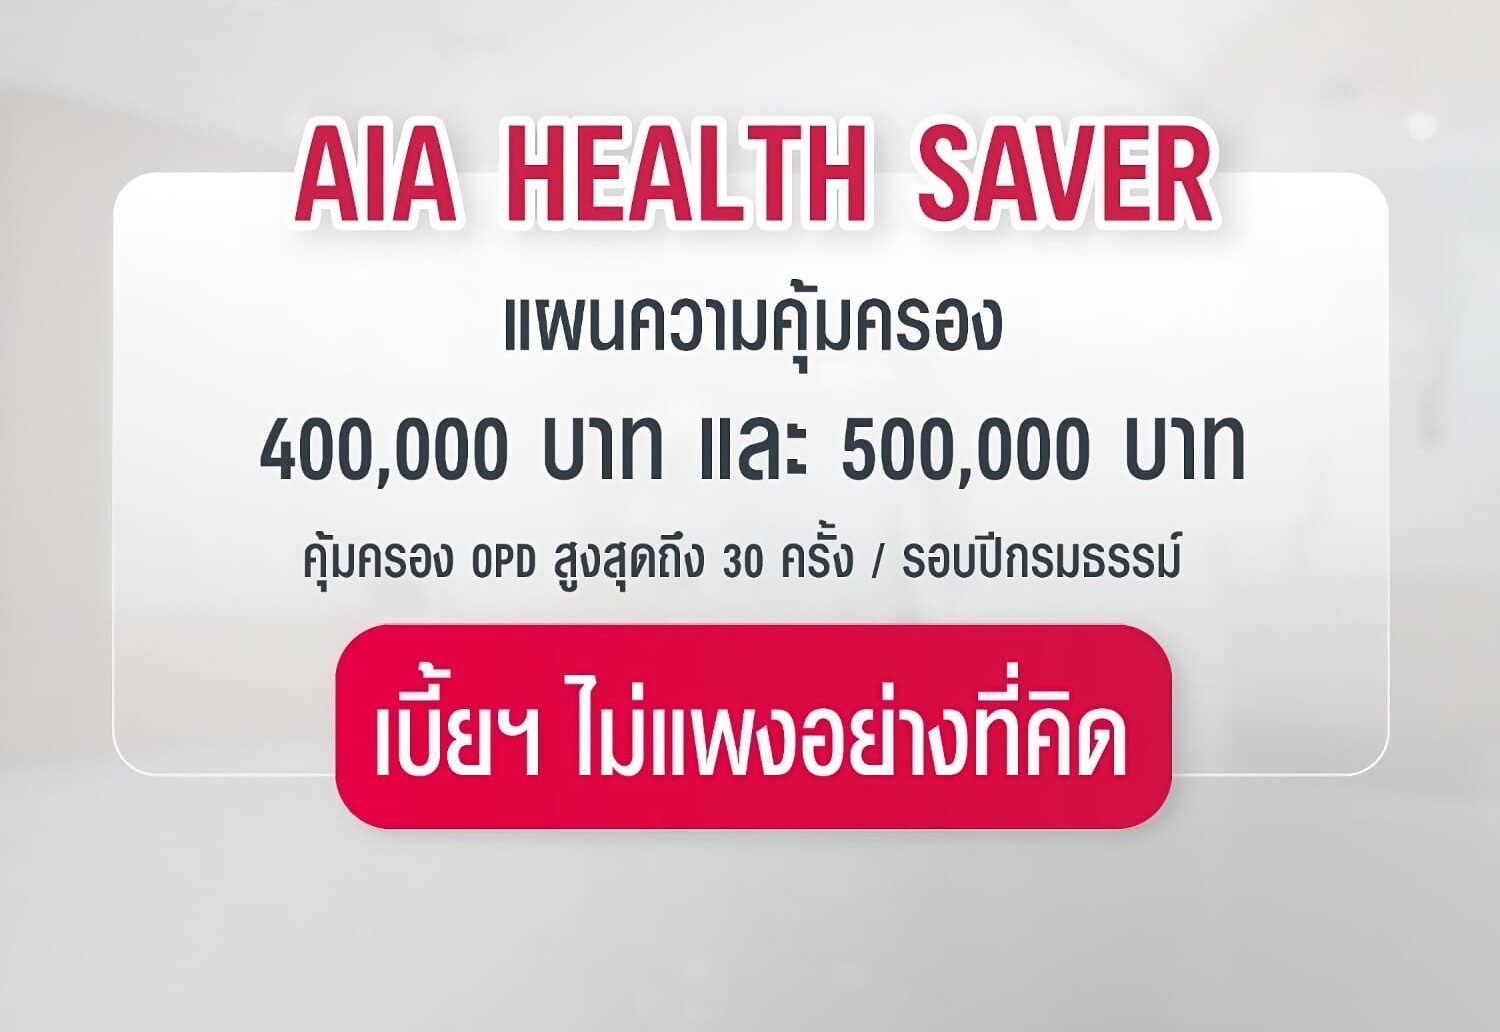 AIA Health Saver ประกันสุขภาพแบบเหมาจ่าย มี OPD